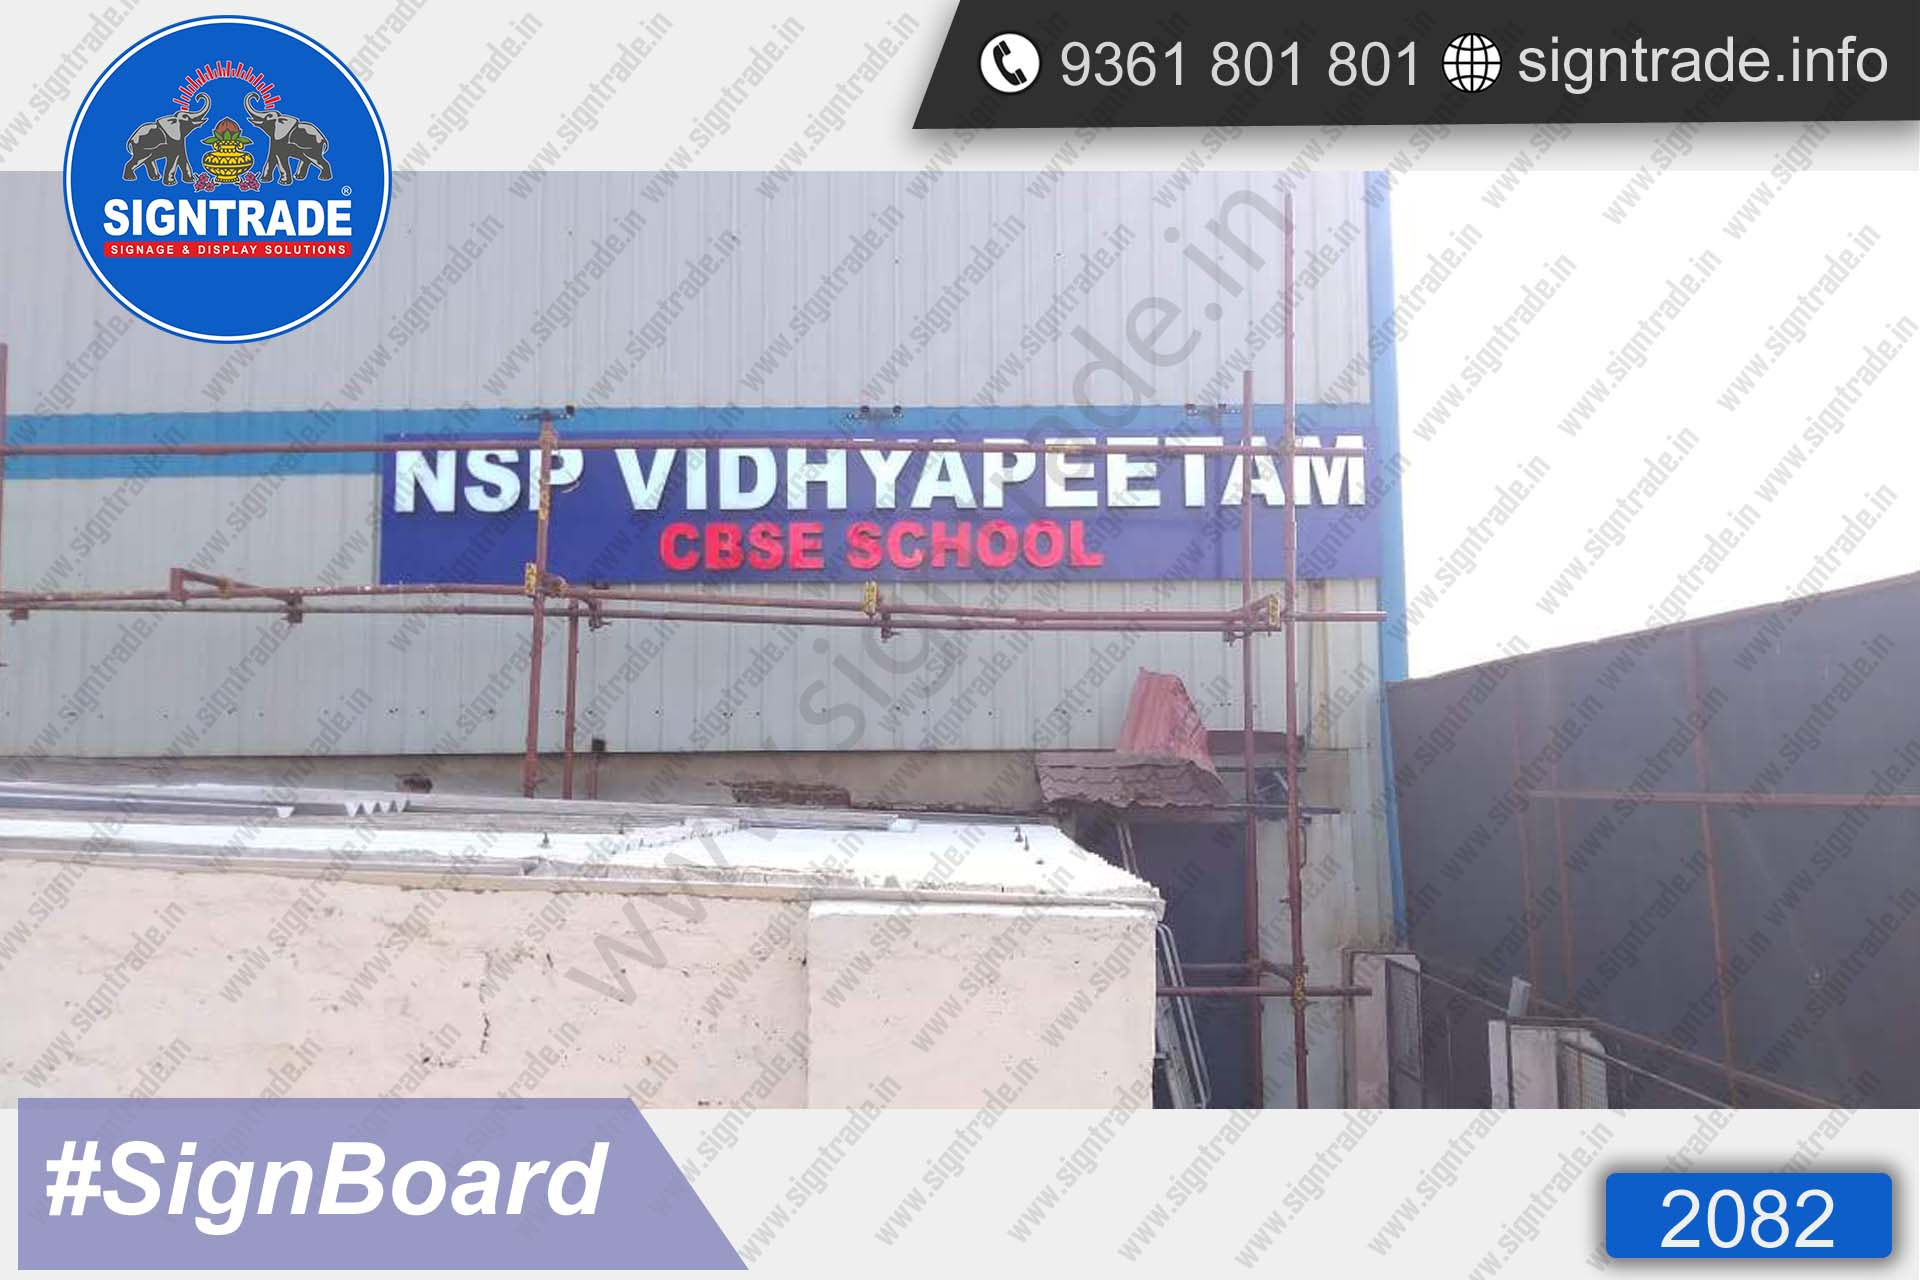 NSP Vidhyapeetam Sign Board